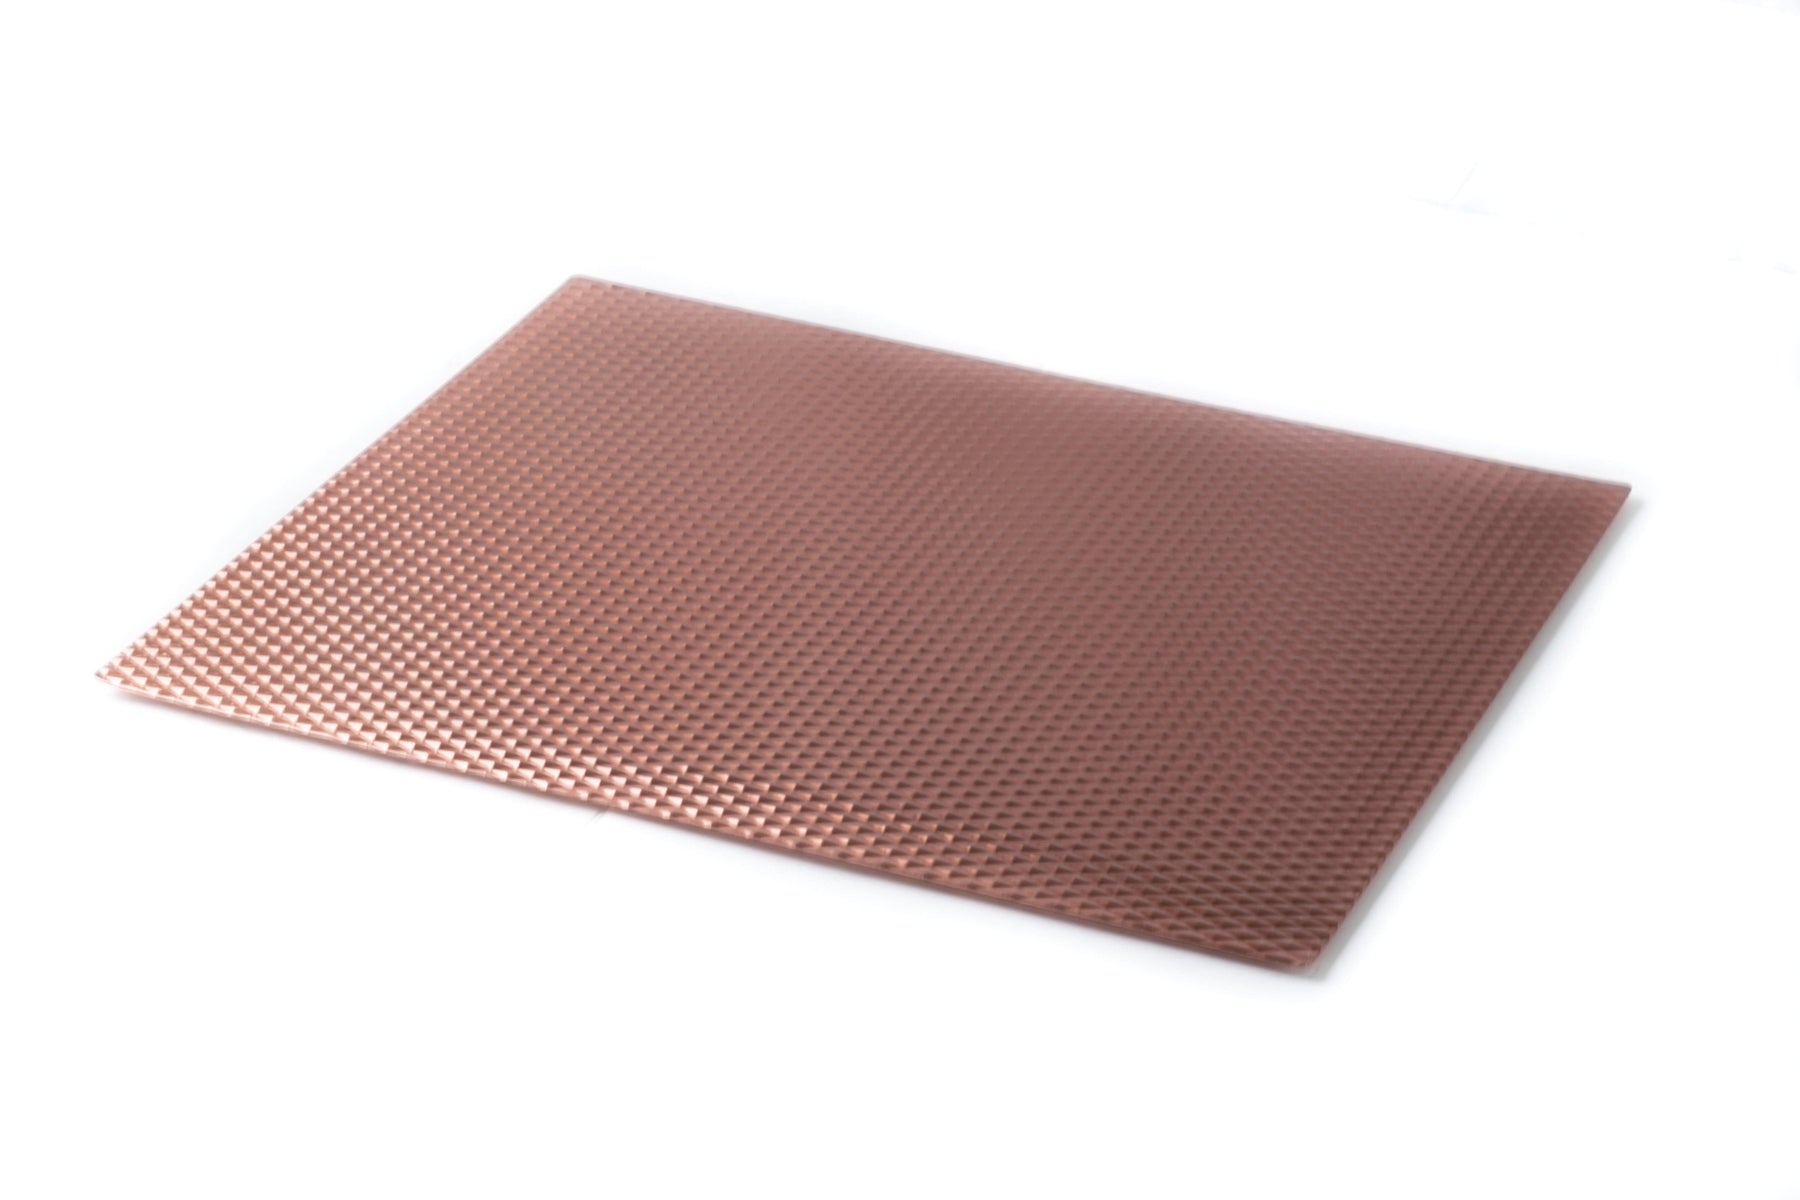 Set of 3 Heat Resistant, Metal, Counter Protector Mats - Warm Copper Color, Bronze